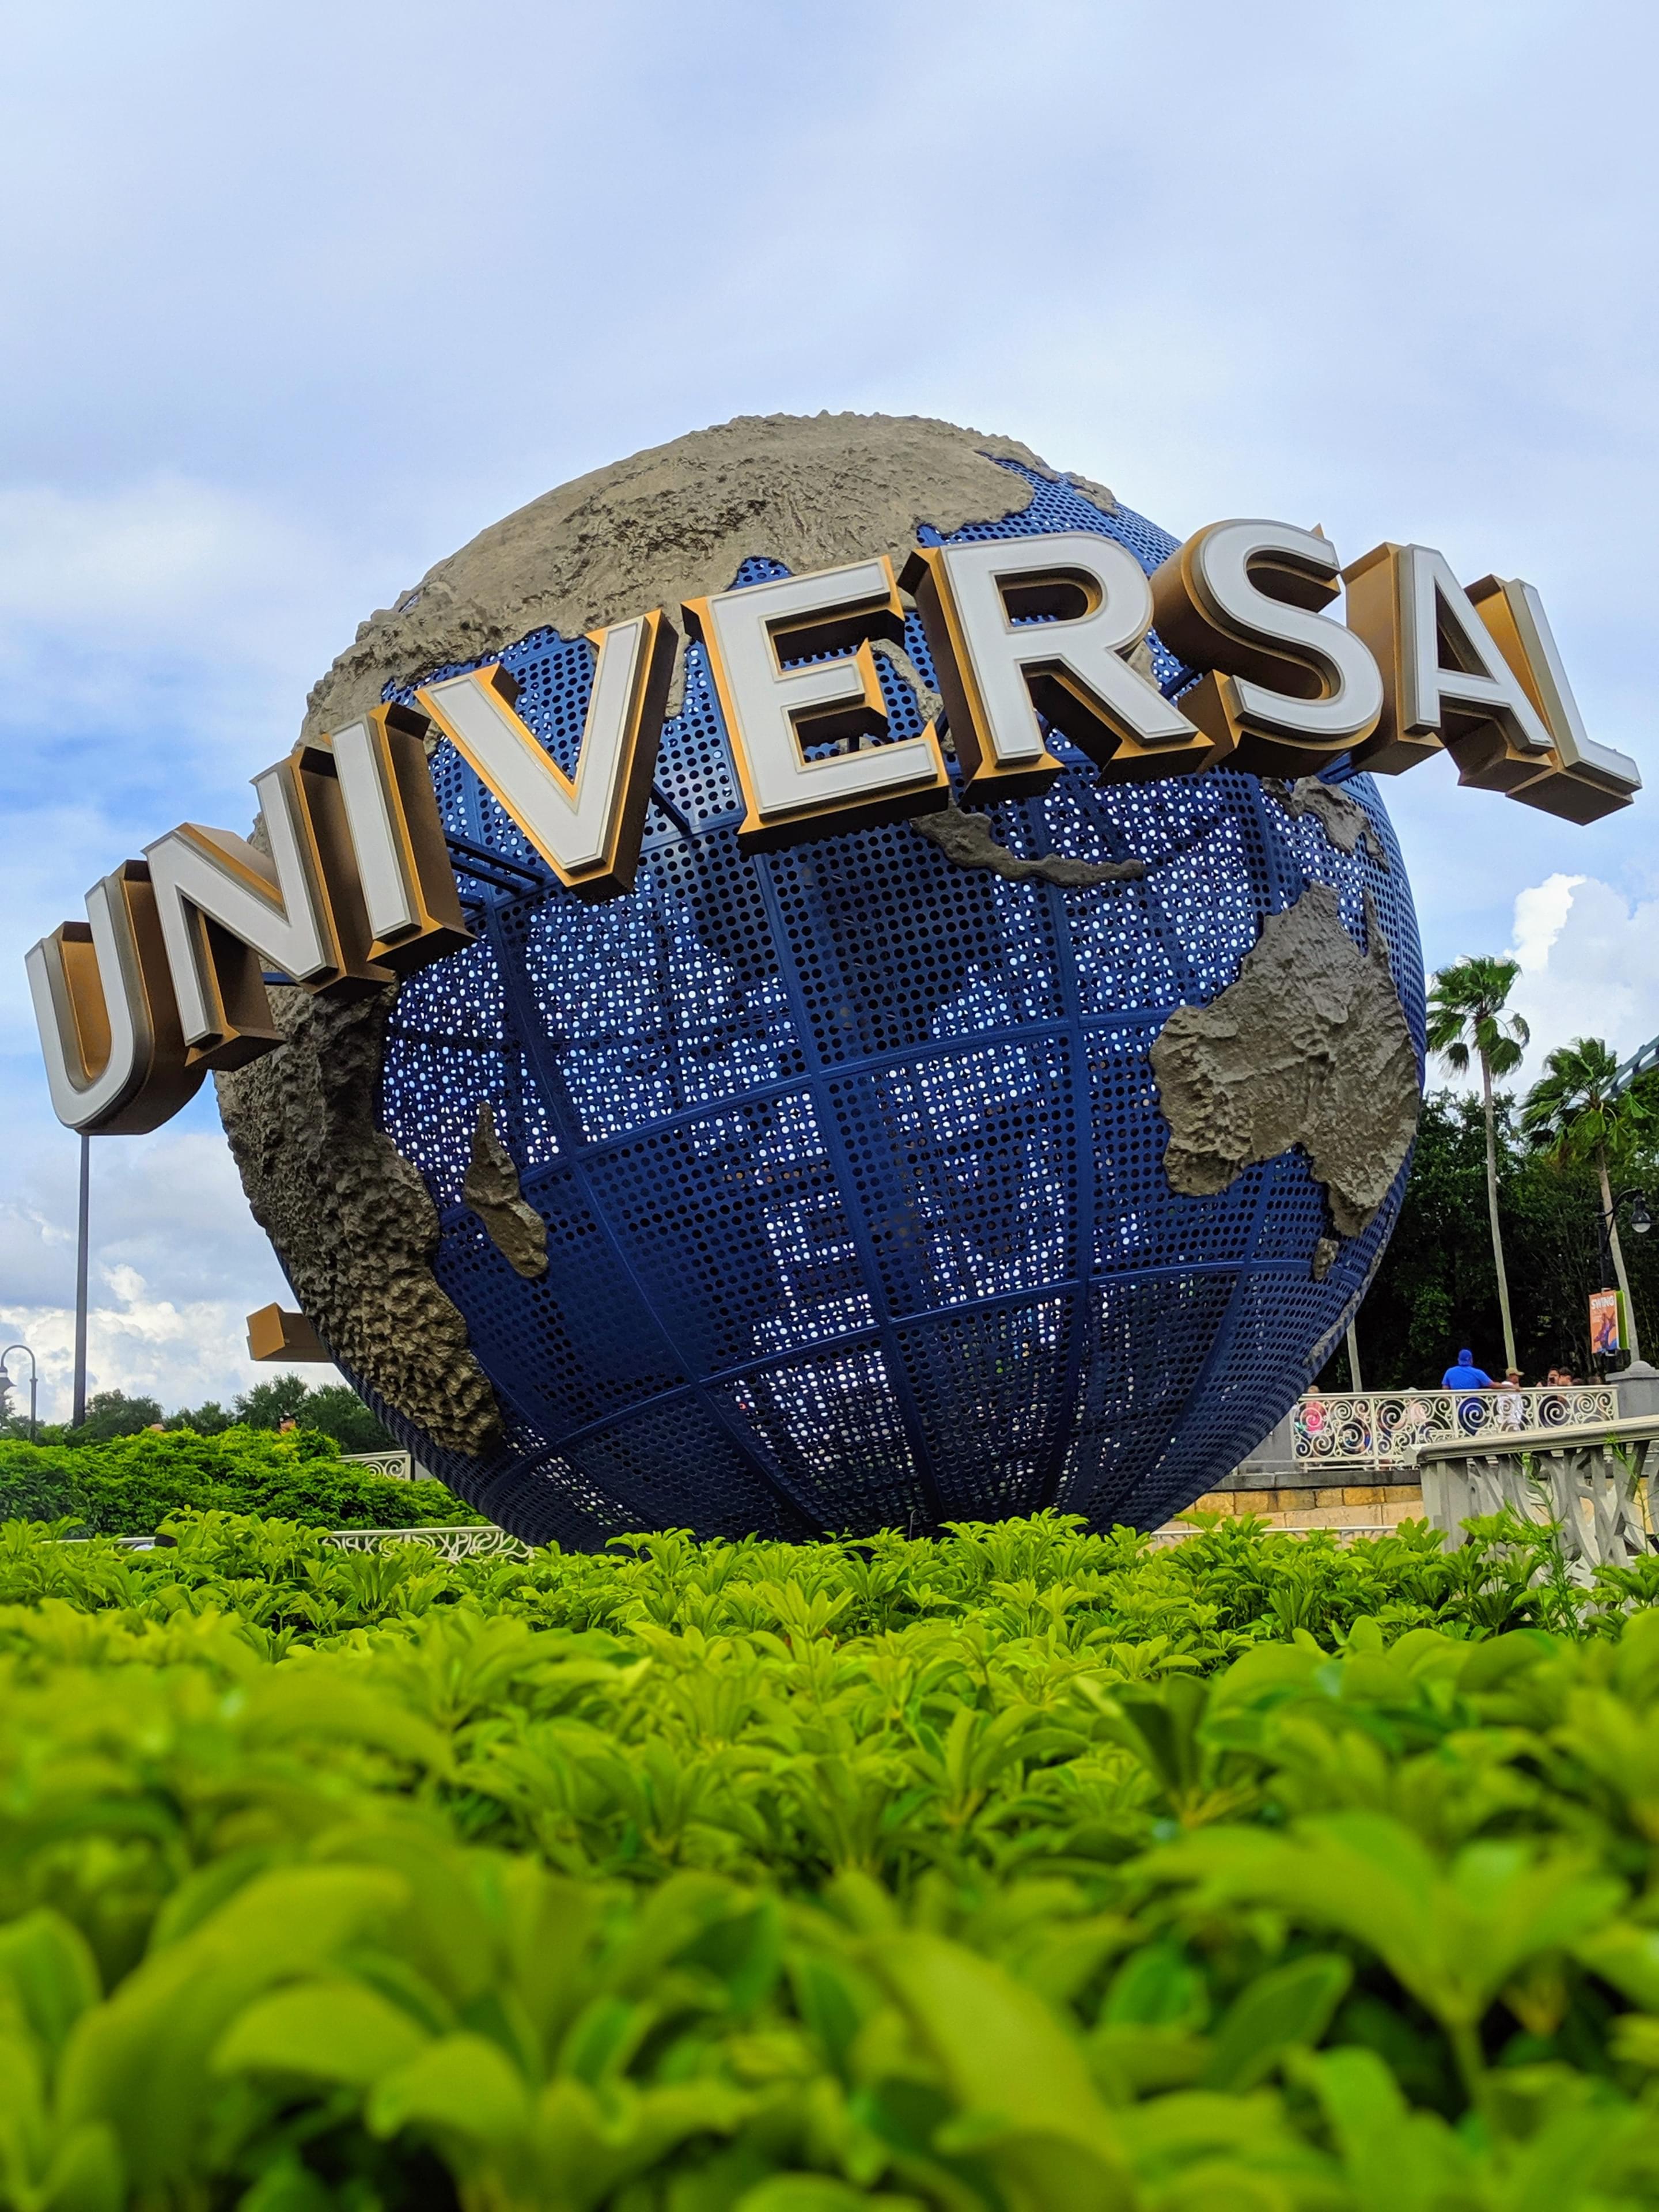 Universal Orlando Overview